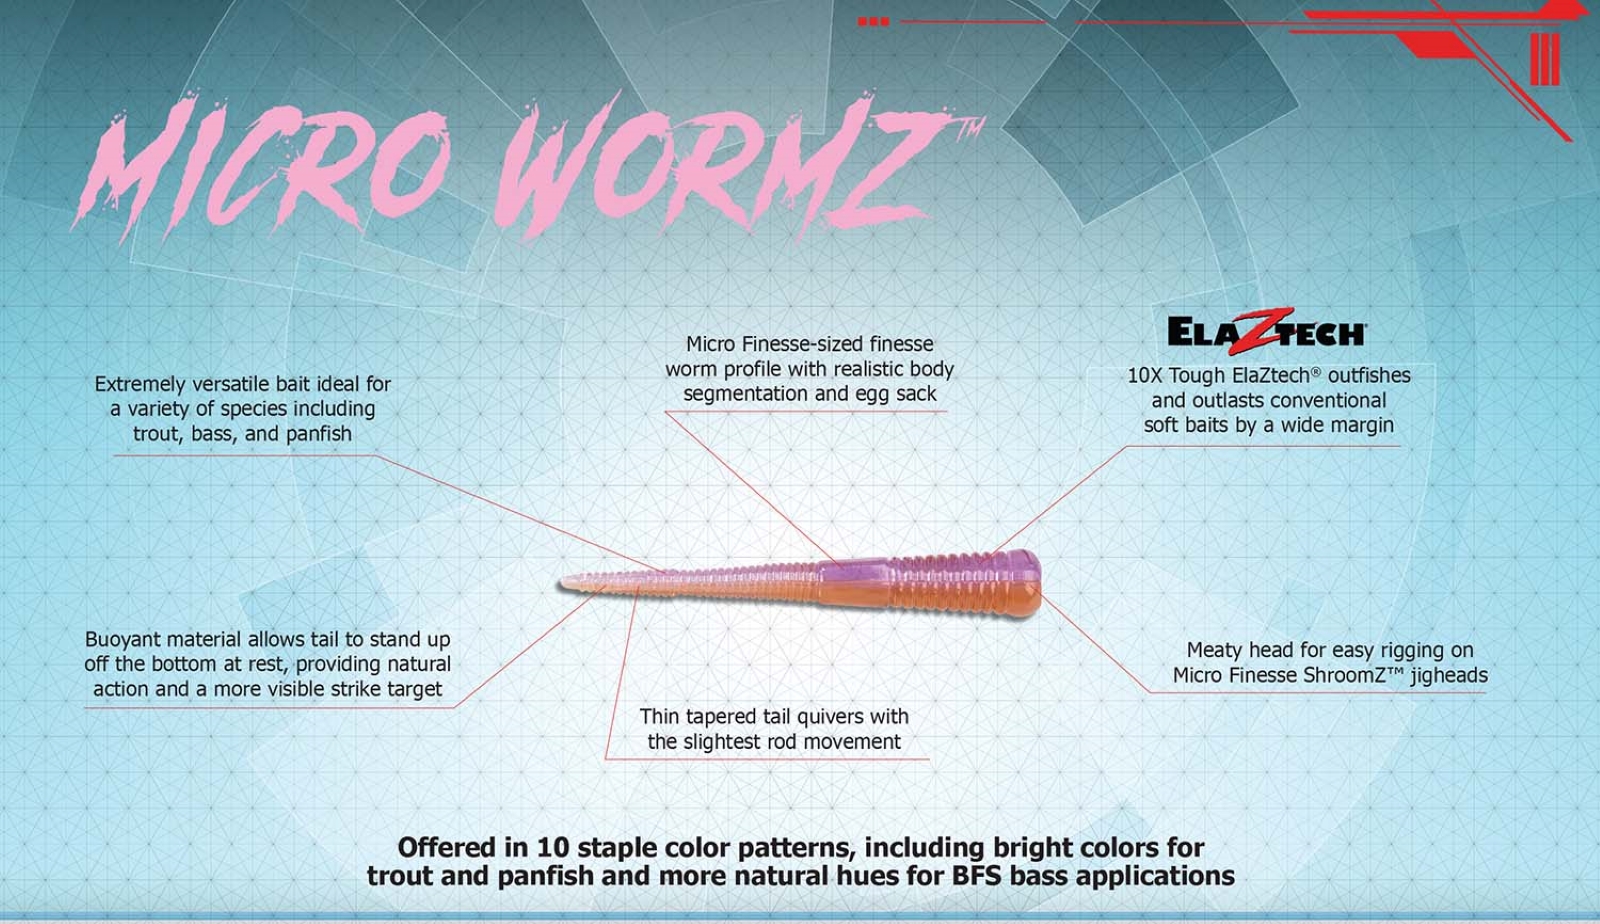 Z-Man's Newest Micro Finesse System Bait - The Micro WormZ